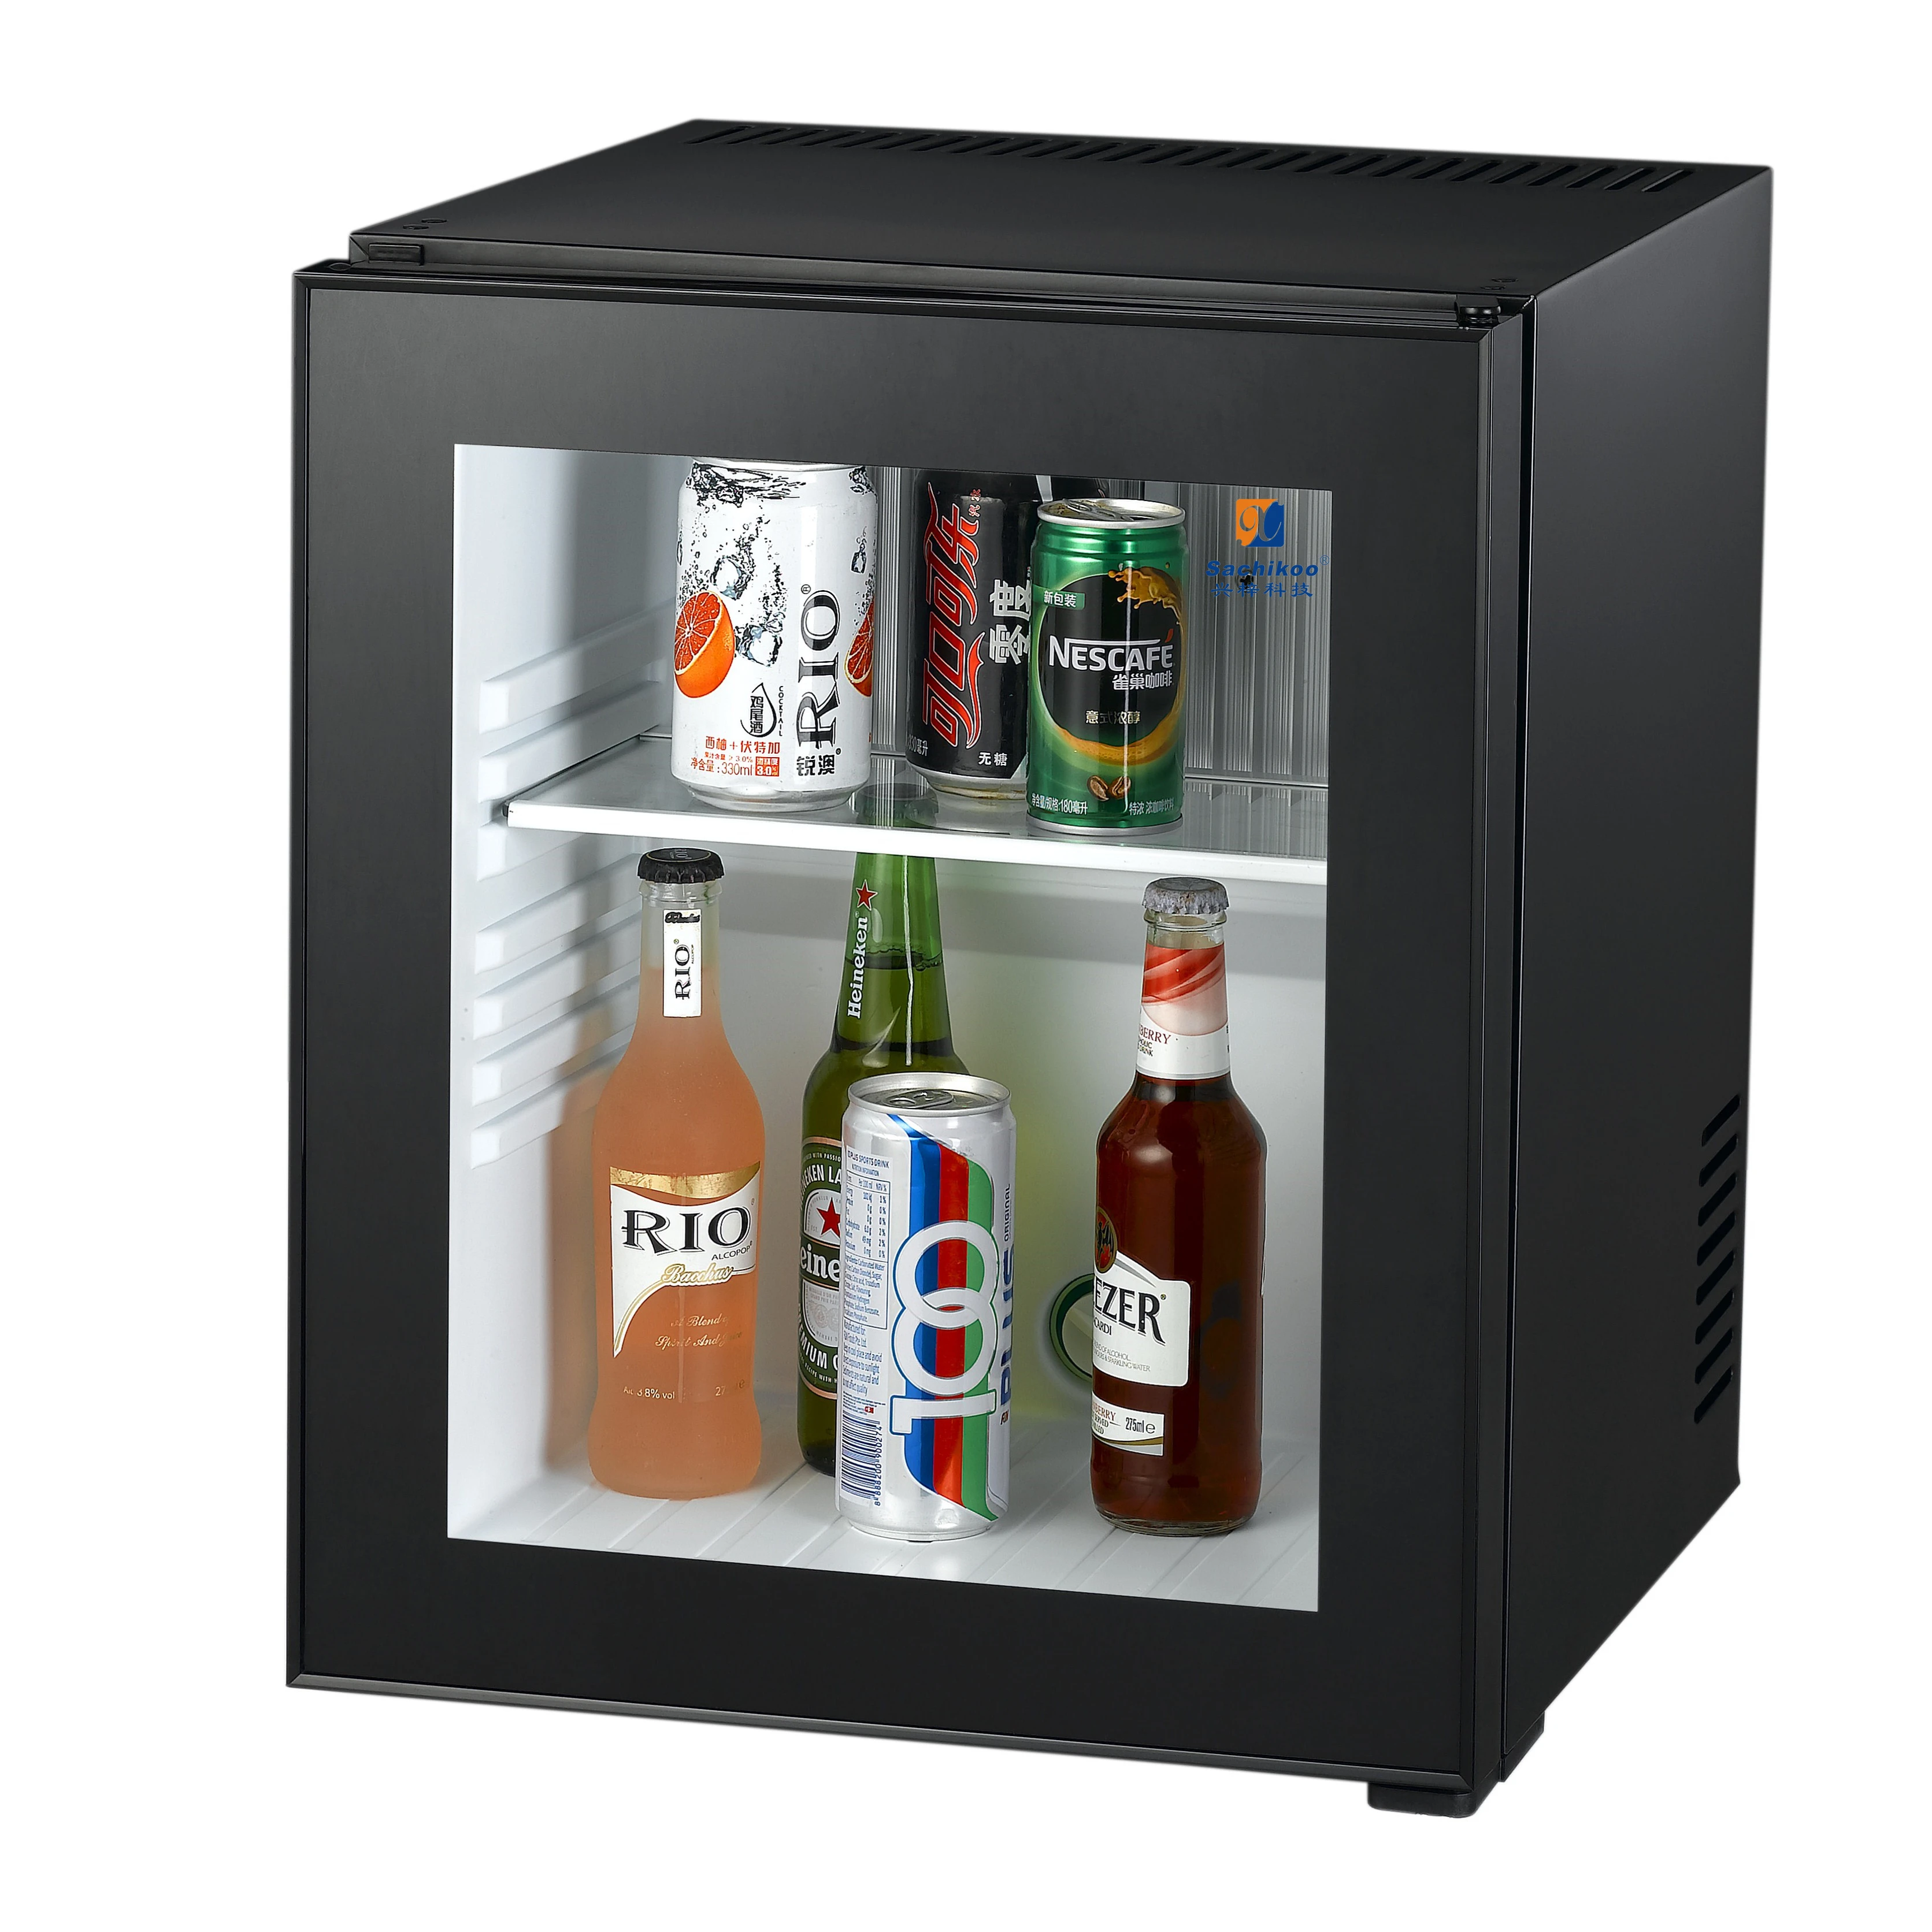 30L Hotel and home use mini bar fridge, small refrigerator